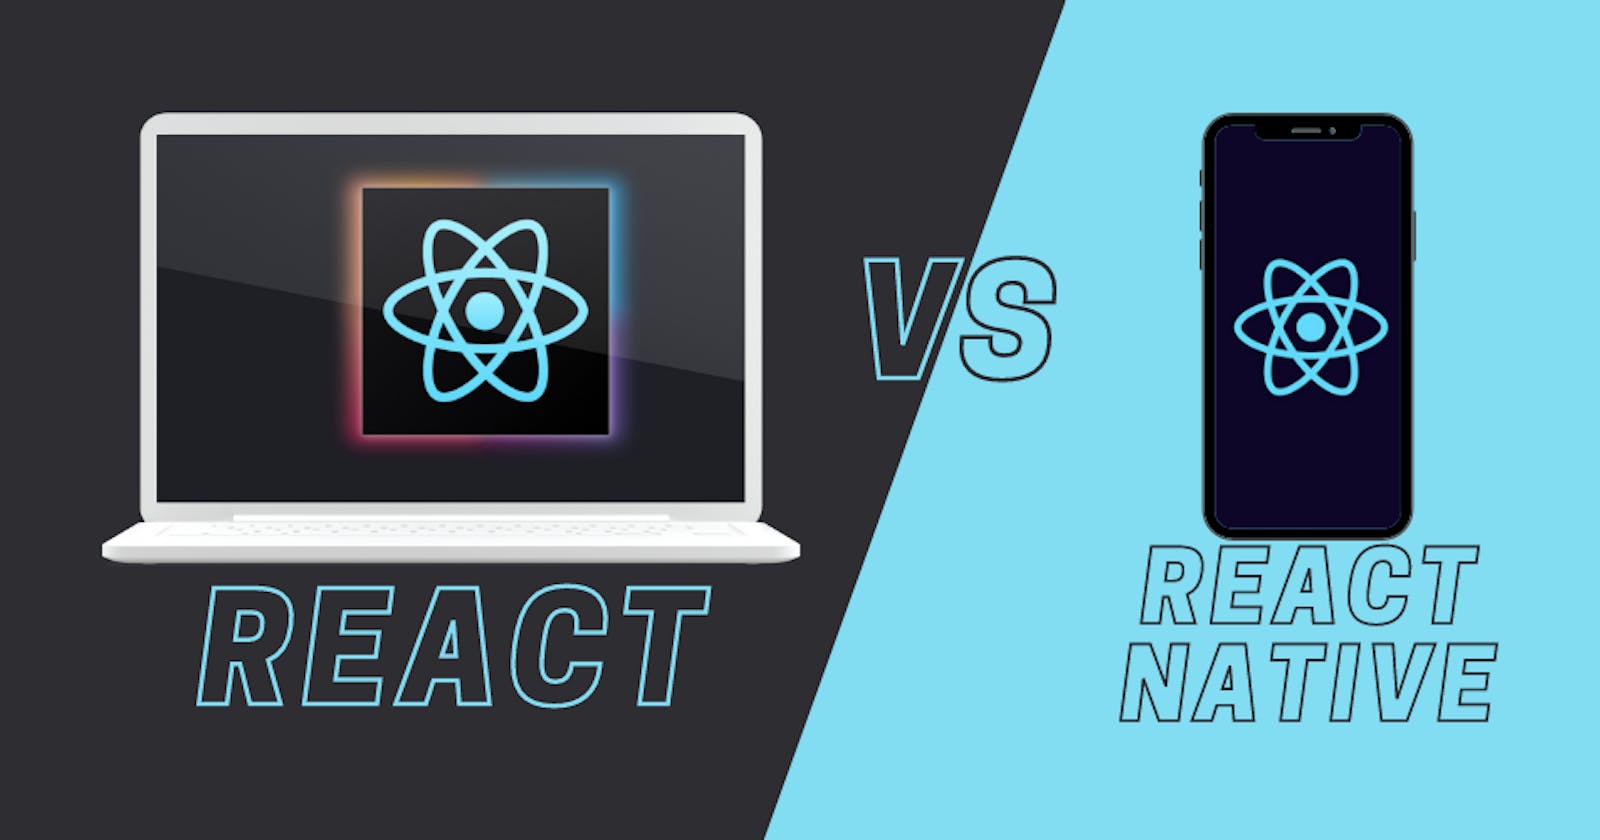 React vs React Native